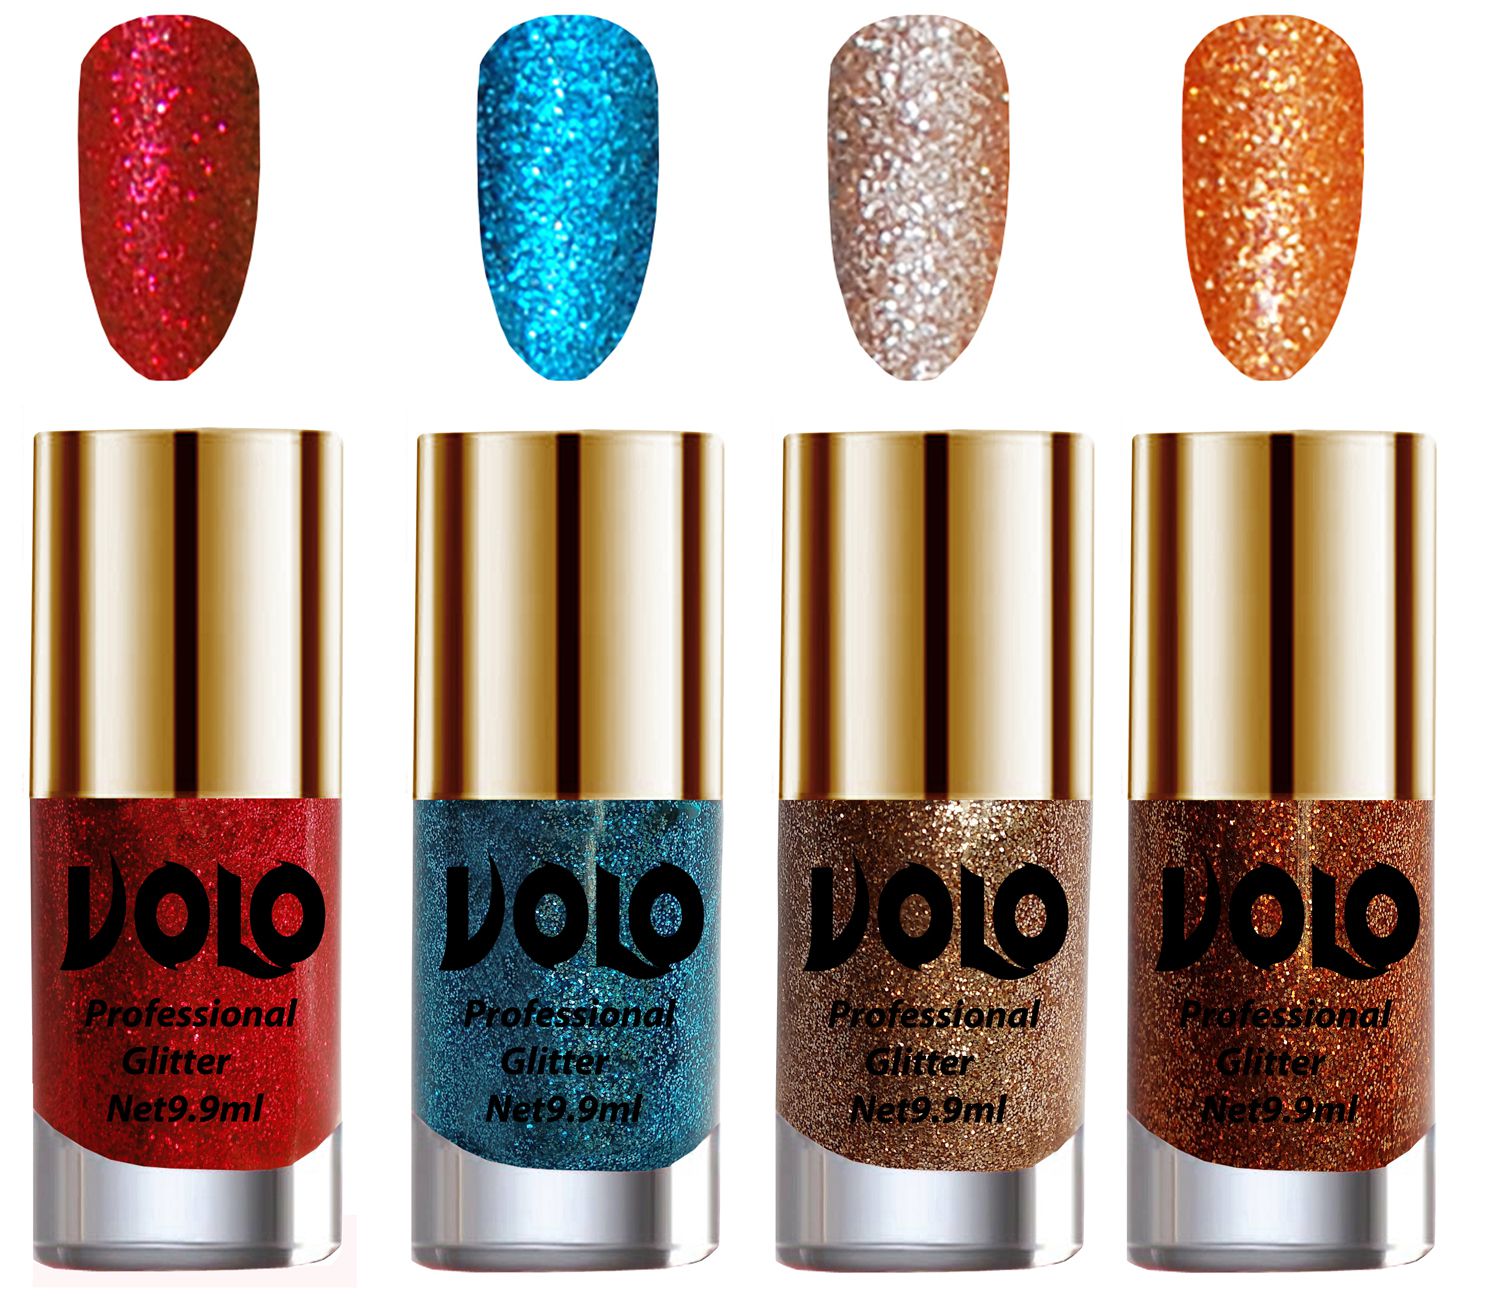     			VOLO Professionally Used Glitter Shine Nail Polish Pink,Blue,Gold Orange Pack of 4 39 mL